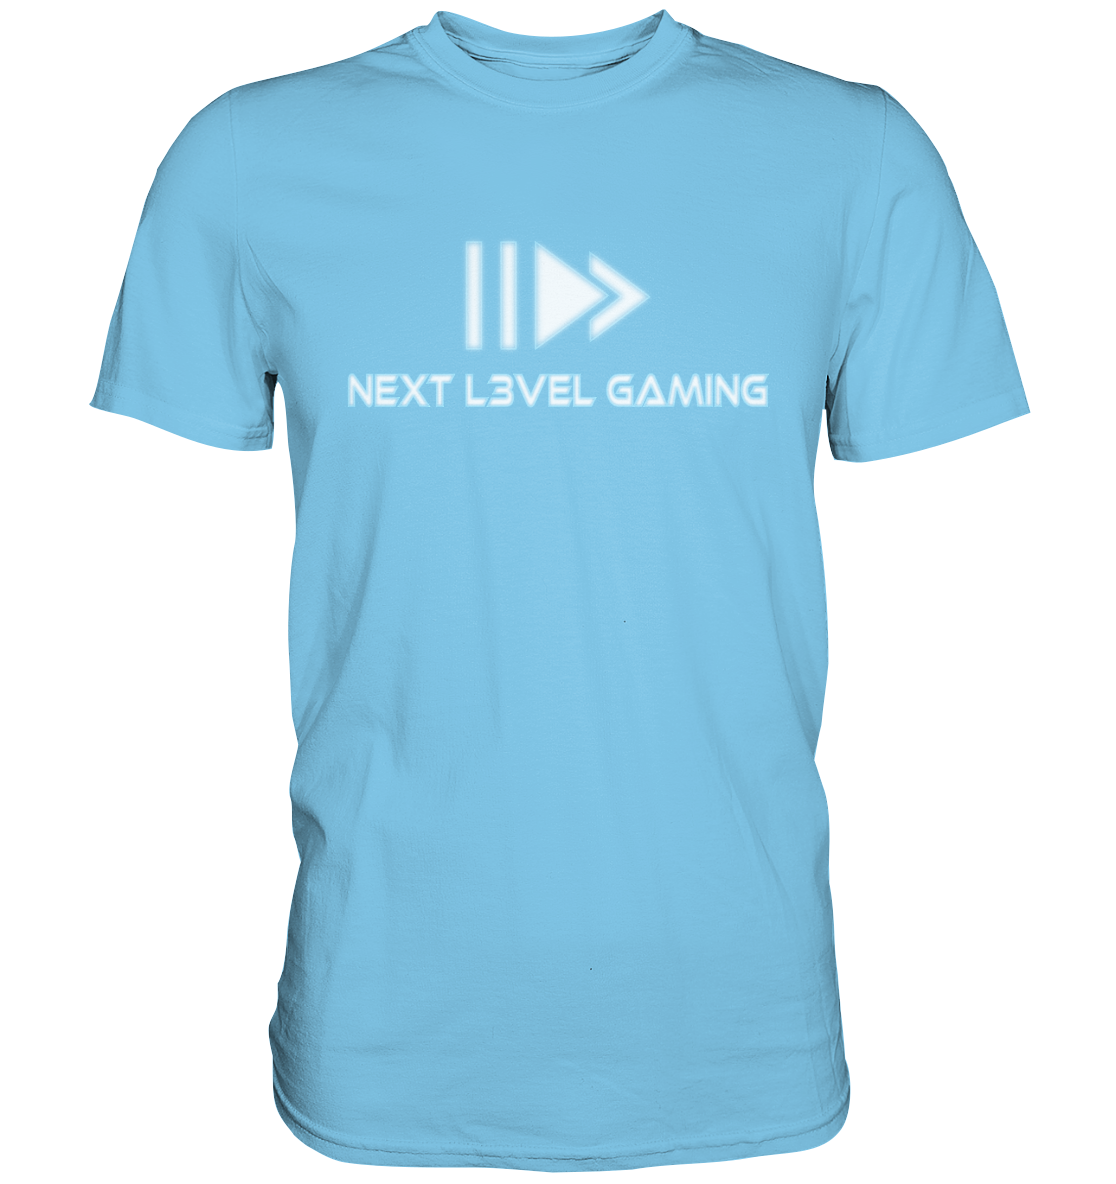 NEXT L3VEL GAMING - Basic Shirt